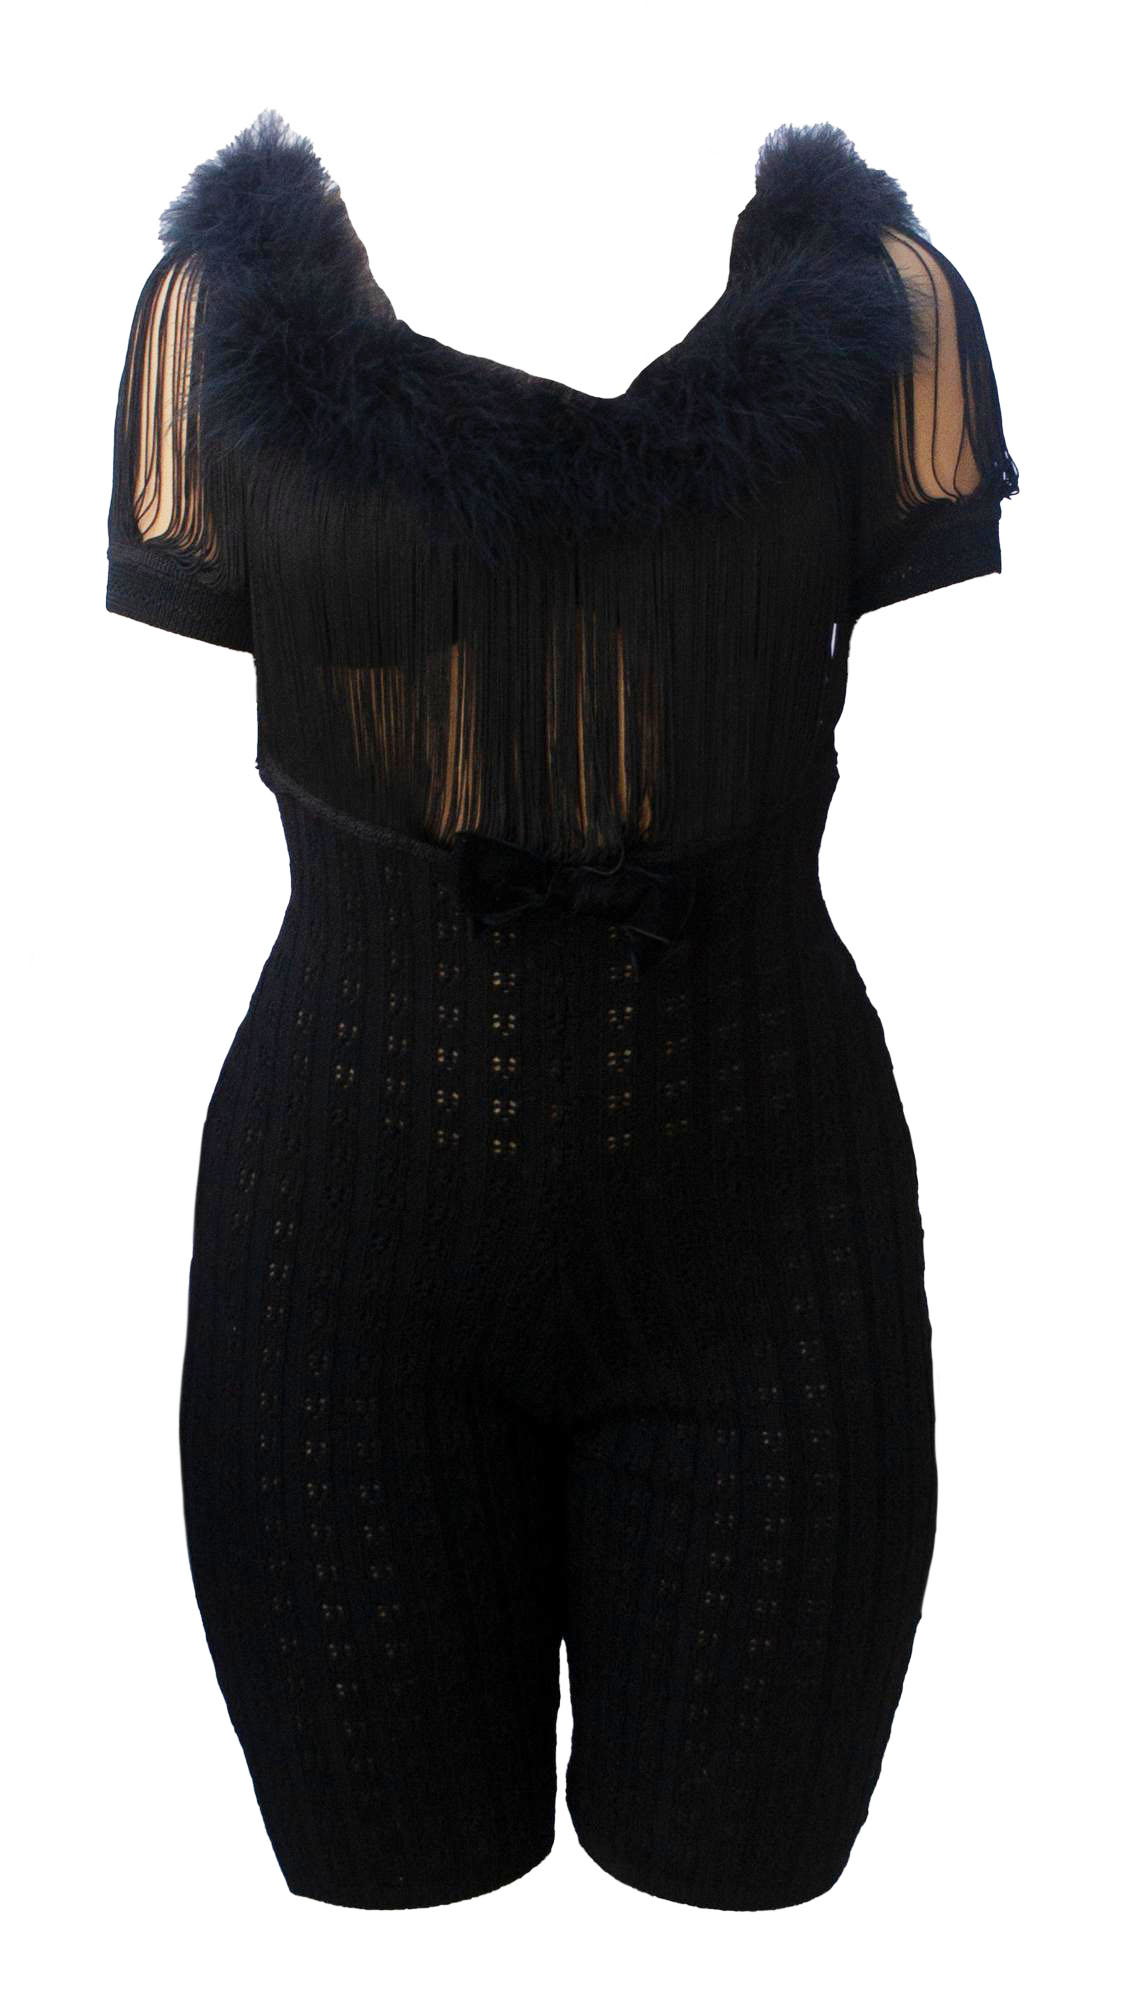 Jean Paul Gaultier KNITTED SHORT JUMPSUIT Description: A black short knitted...